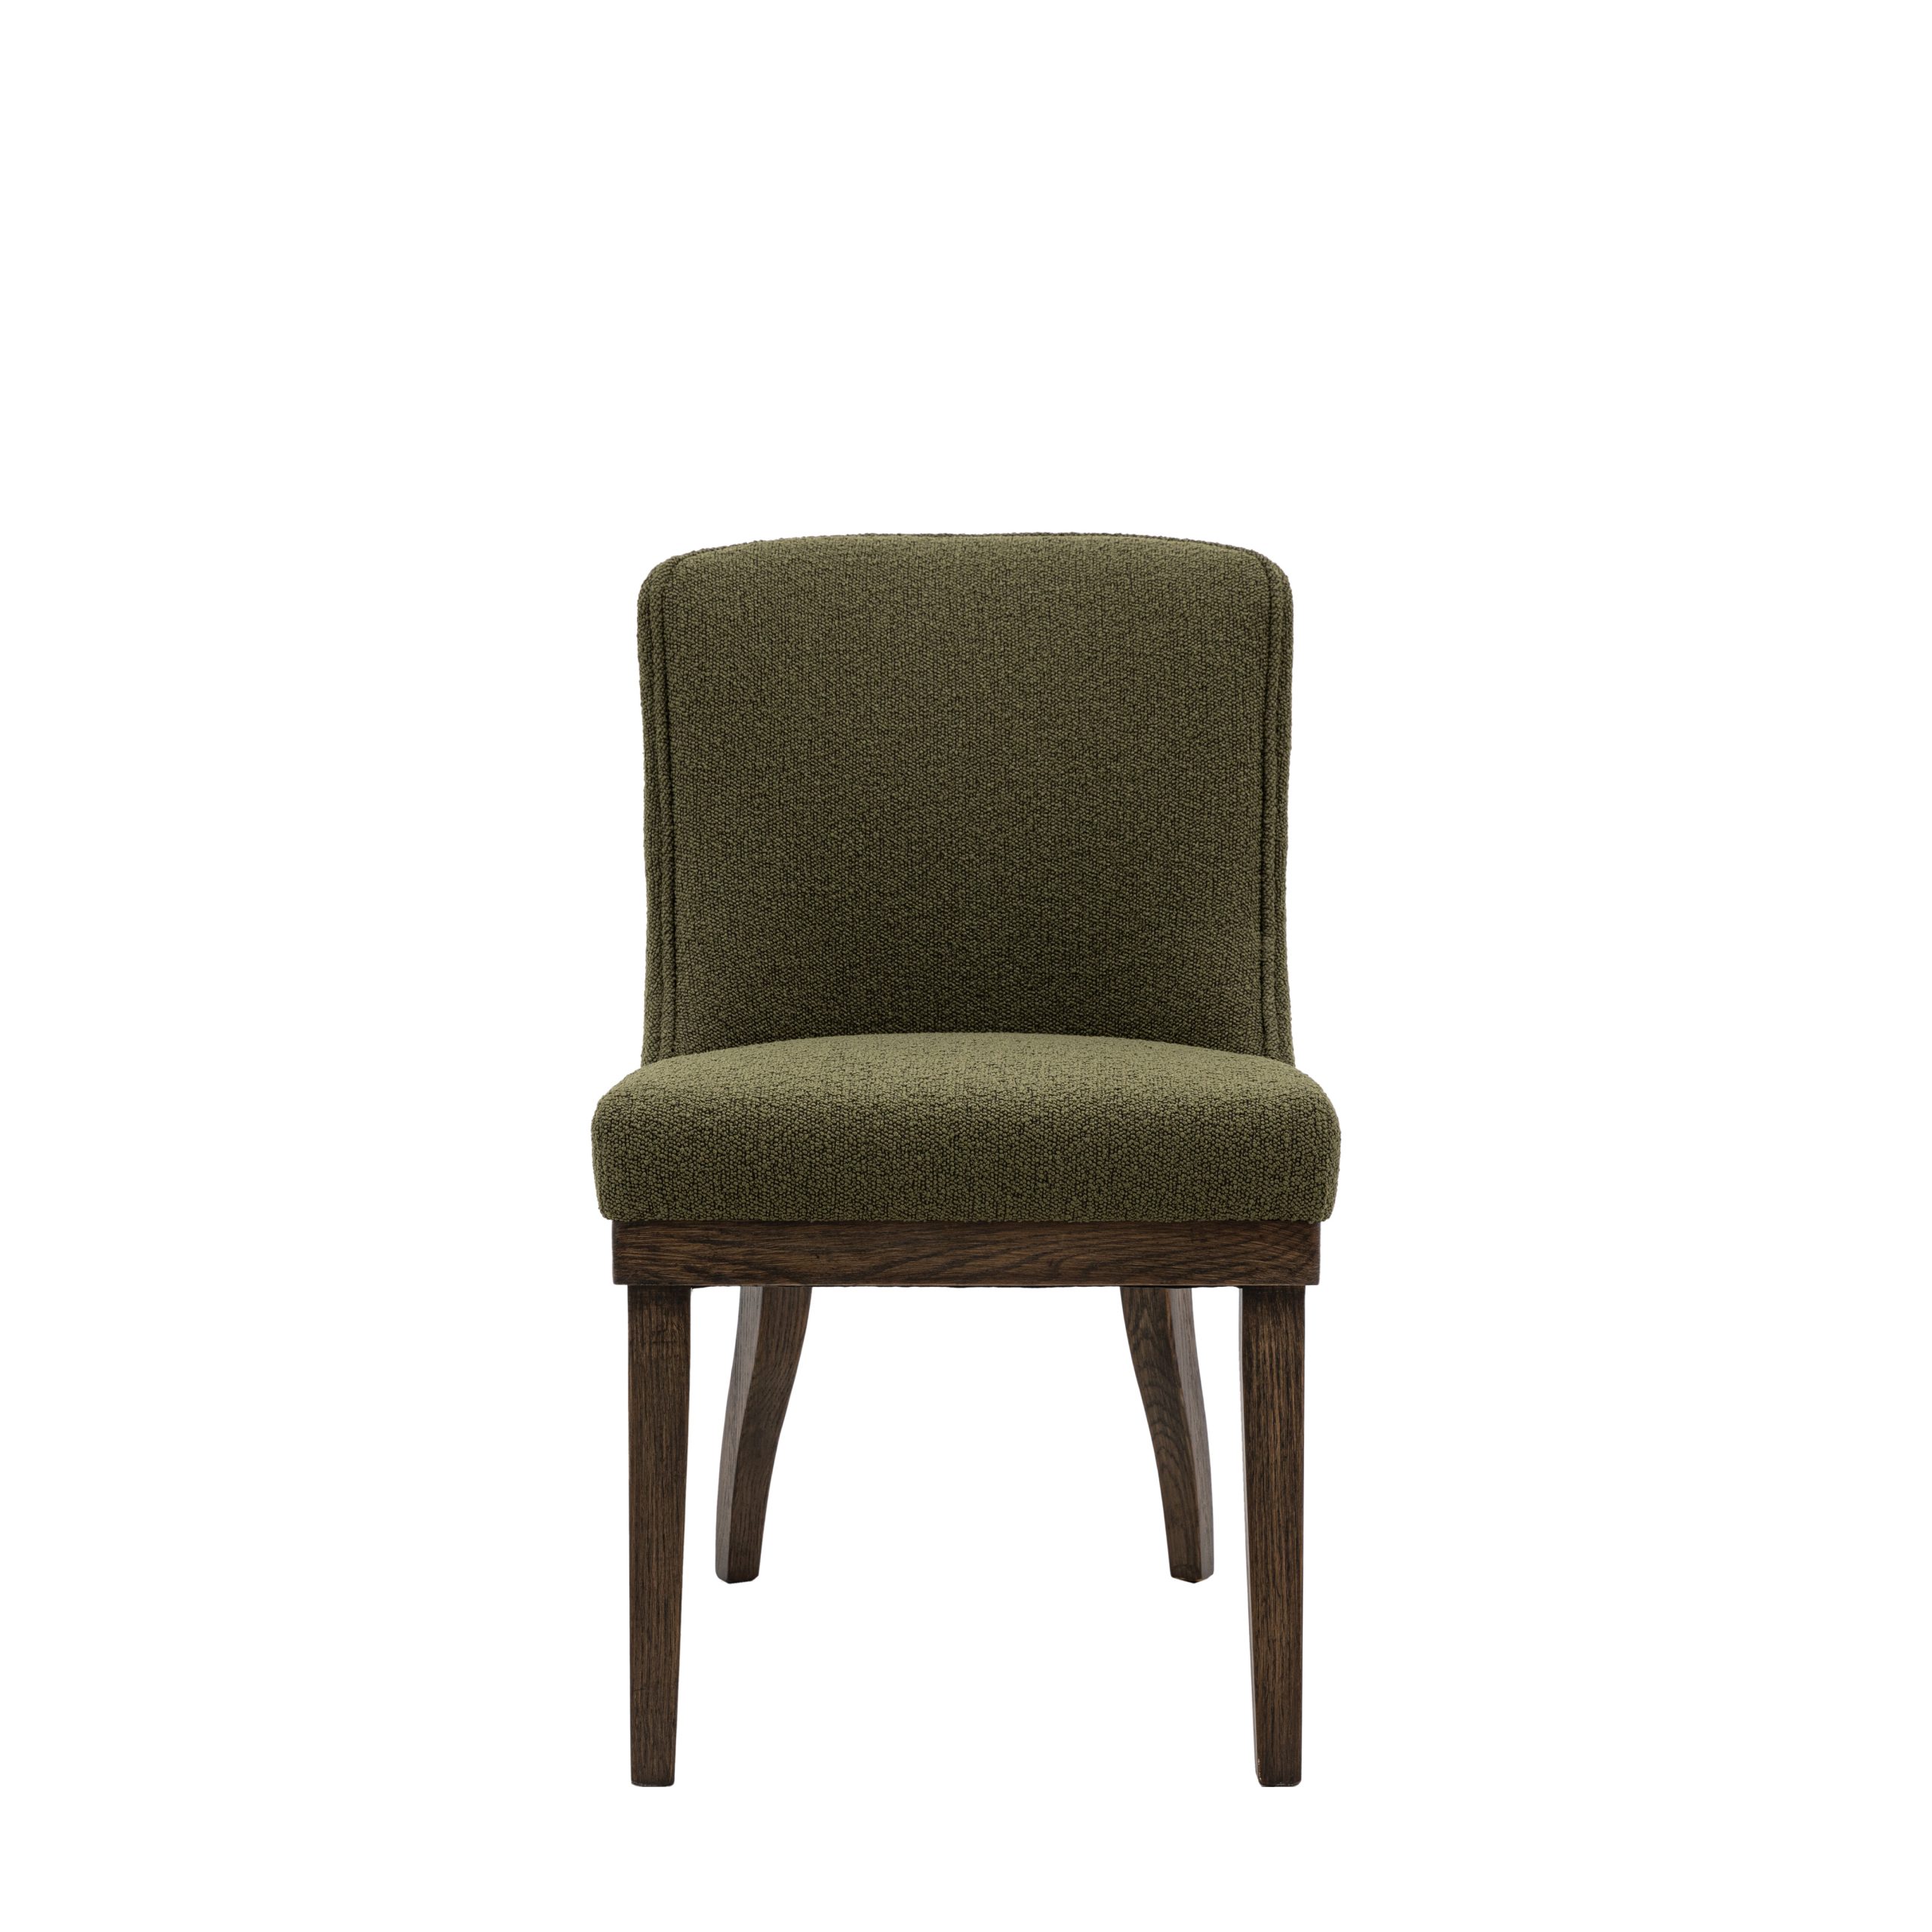 Gallery Direct Kelvedon Dining Chair Green (Set of 2)